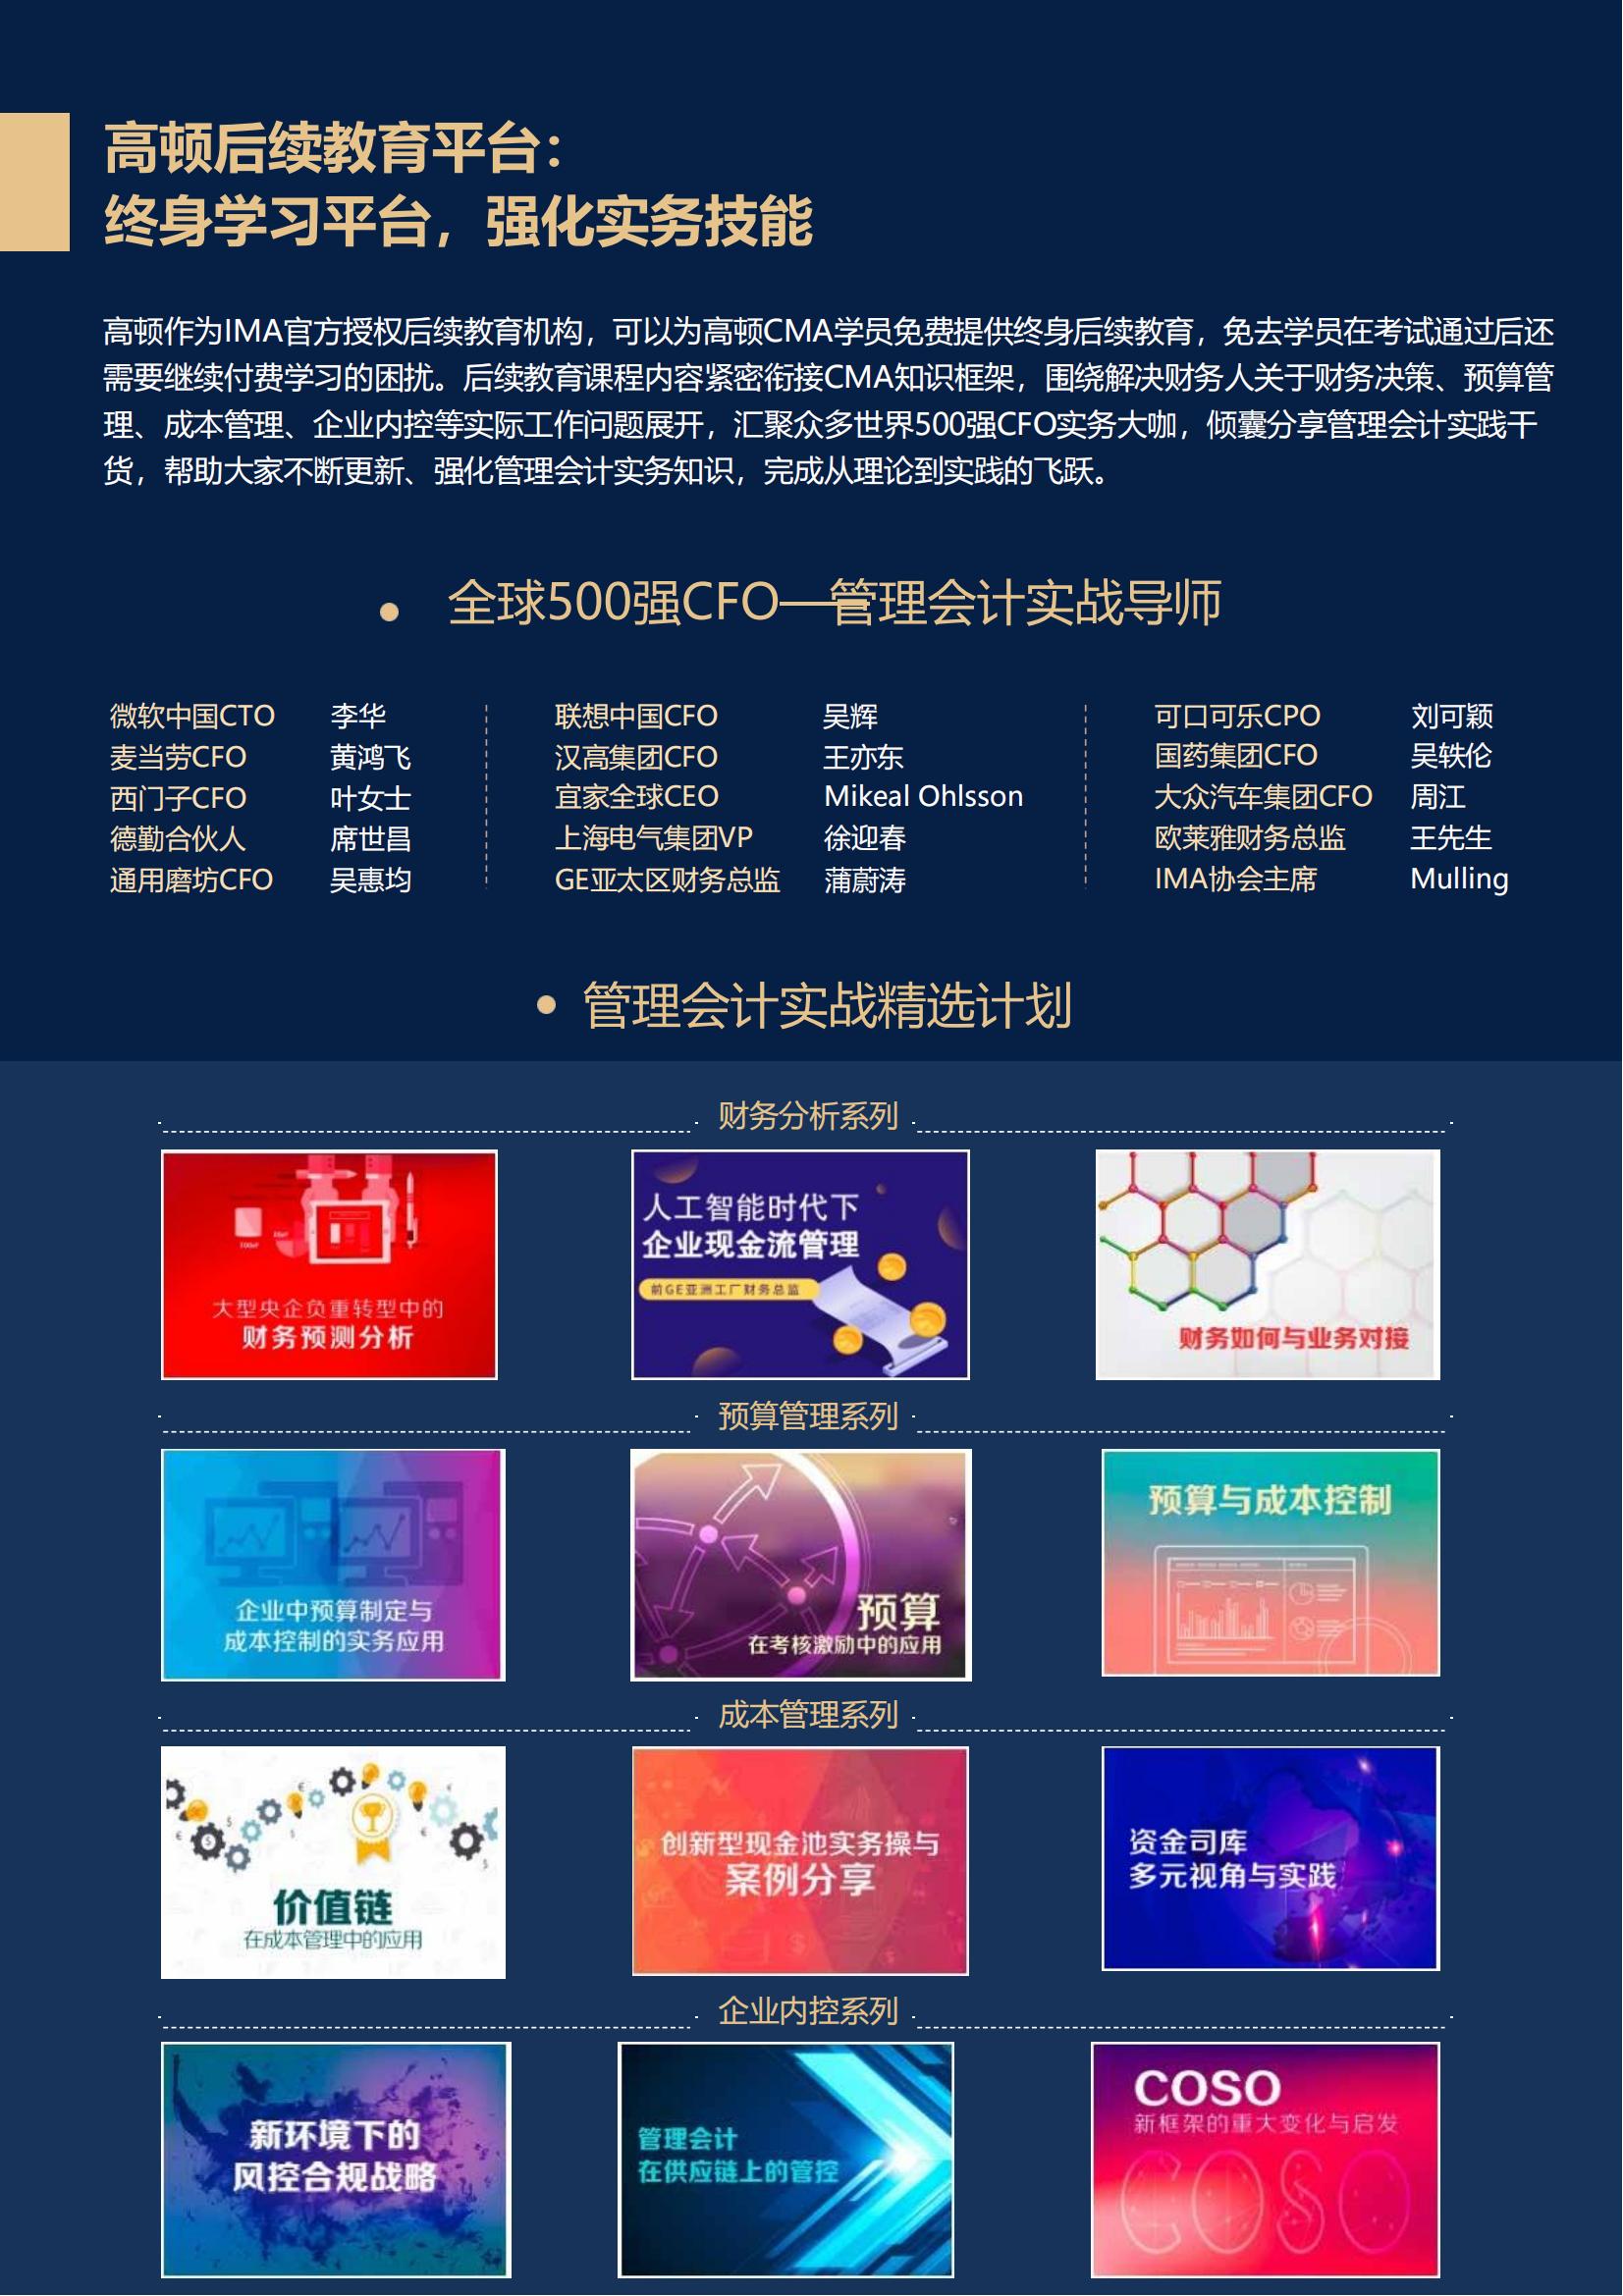 https://simg01.gaodunwangxiao.com/uploadfiles/product-center/202211/25/023a5_20221125141117.jpg